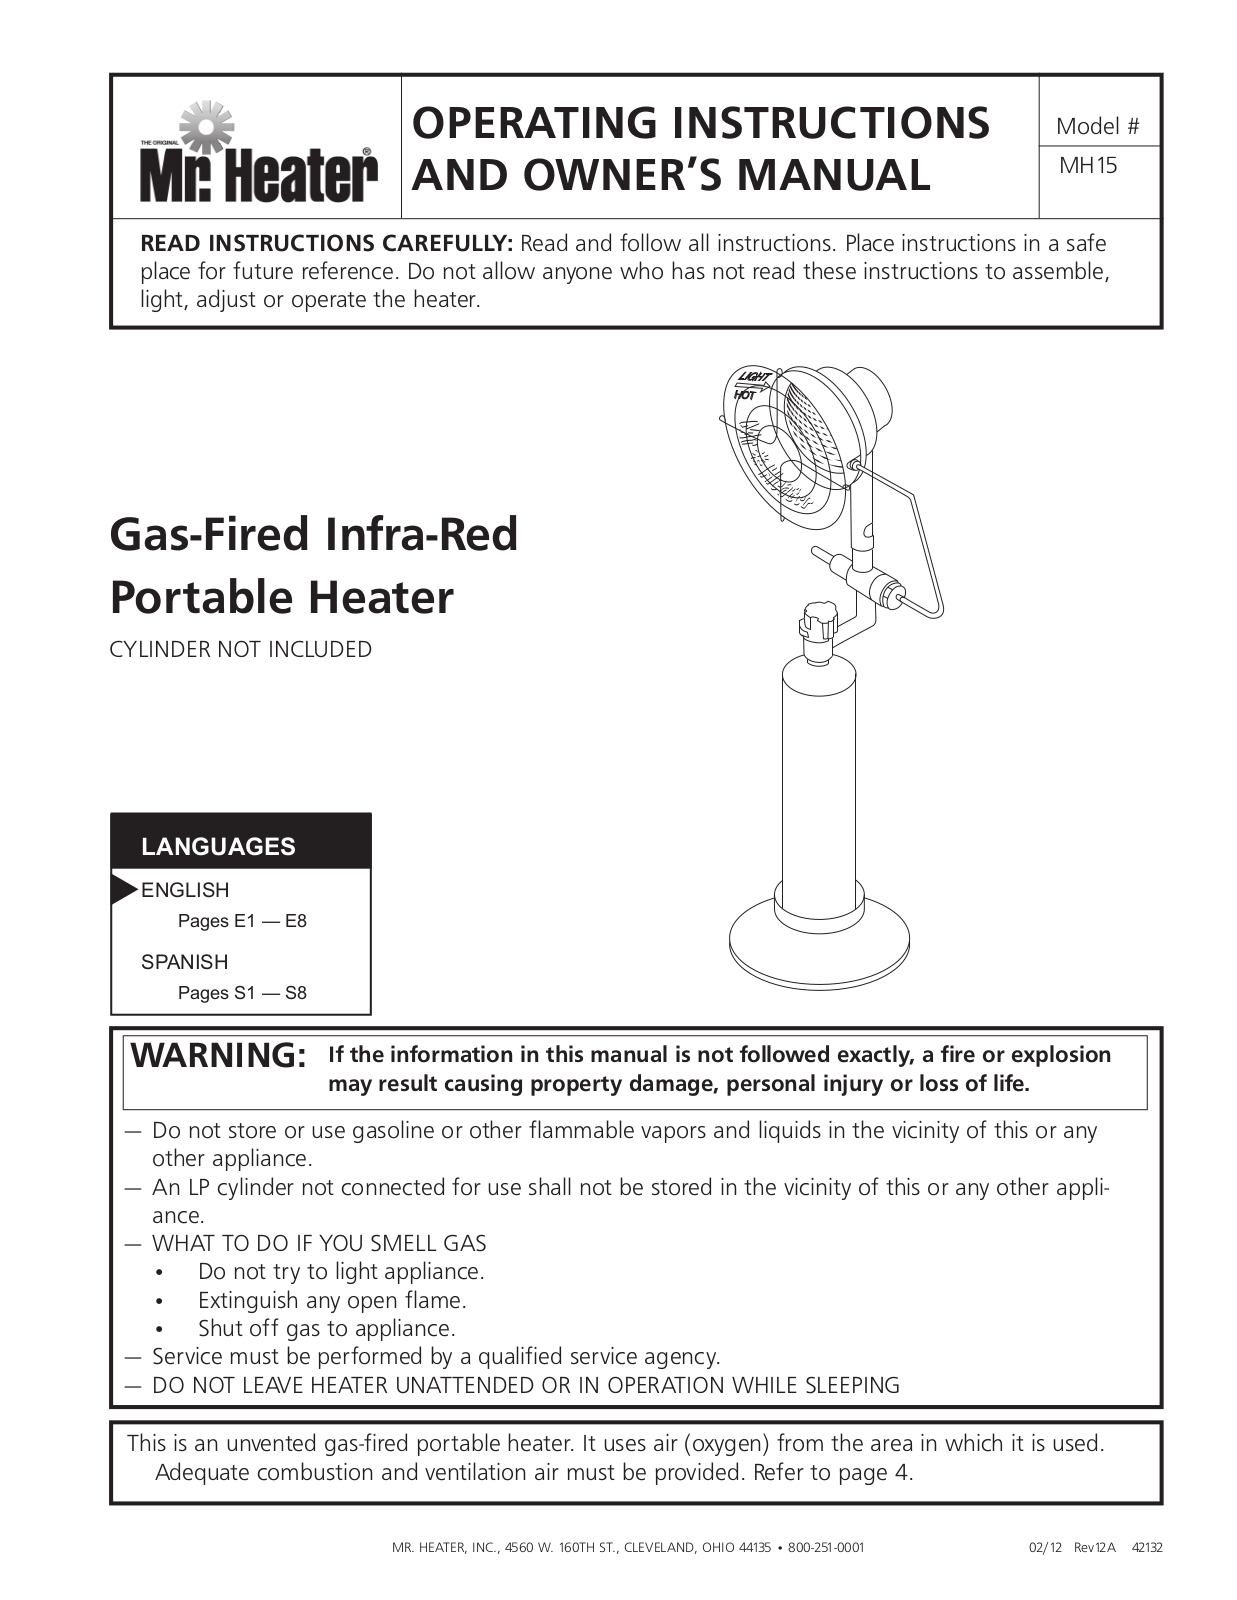 Mr. Heater MH15 User Manual